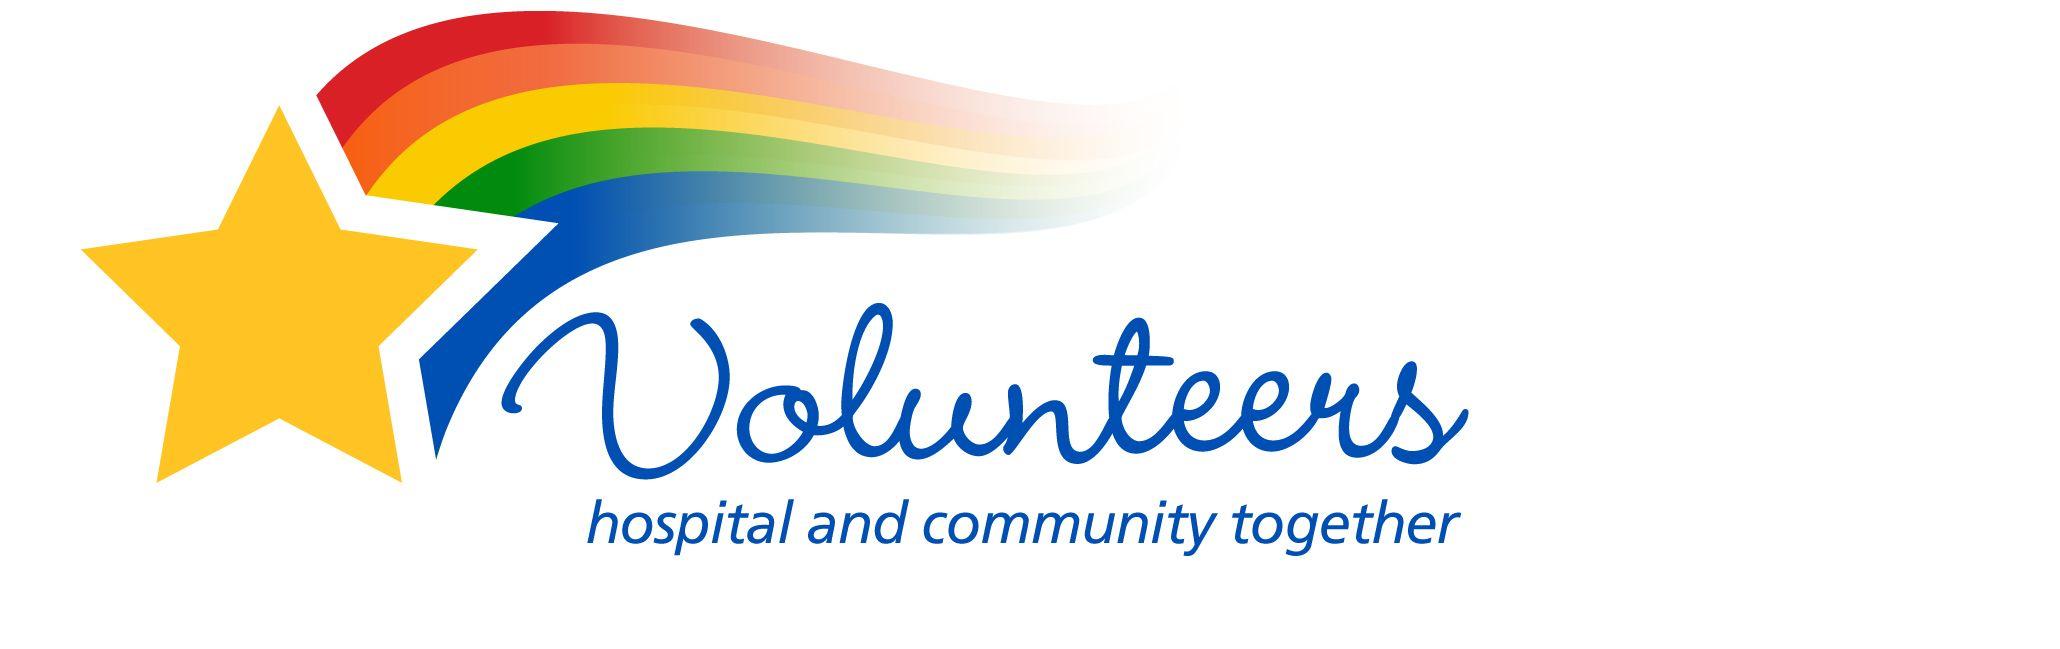 Volunteer Logo - Become a volunteer. Rotherham NHS Foundation Trust